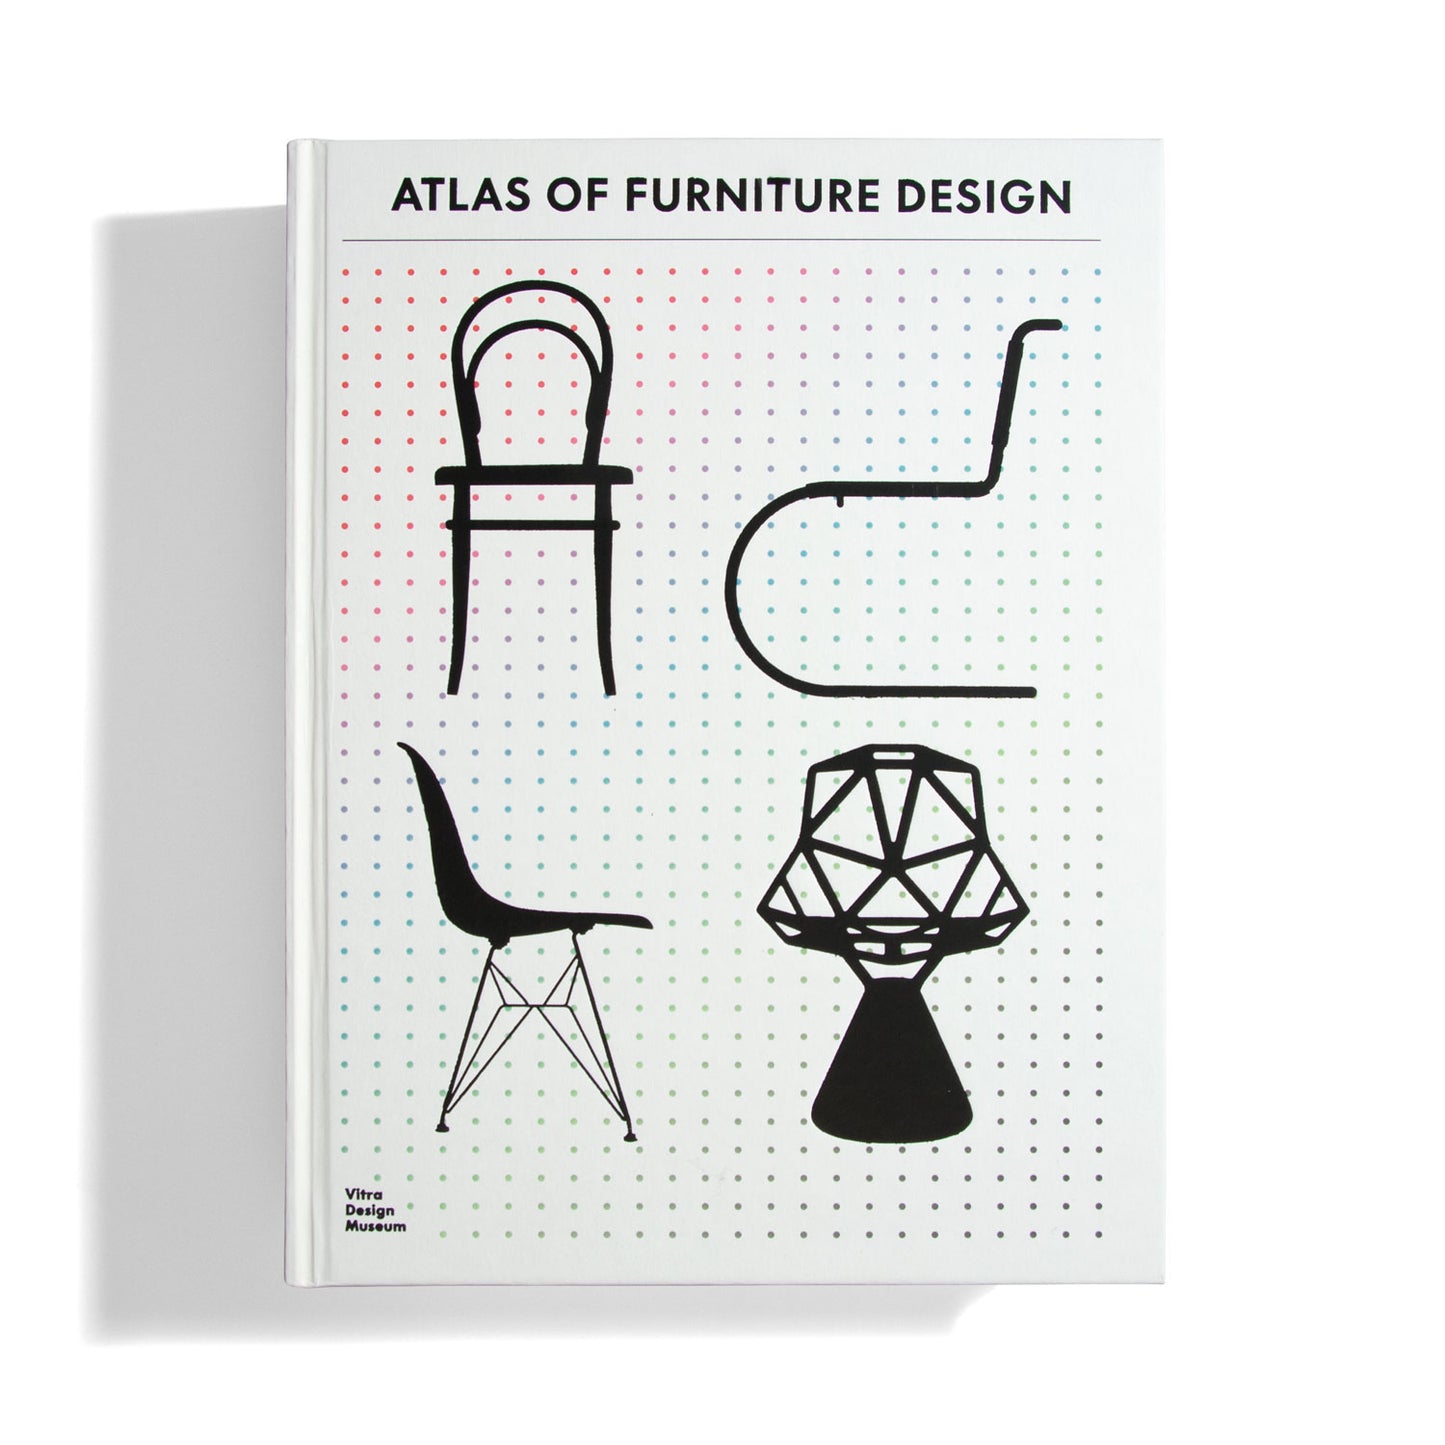 The Atlas of Furniture Design Encyclopedia